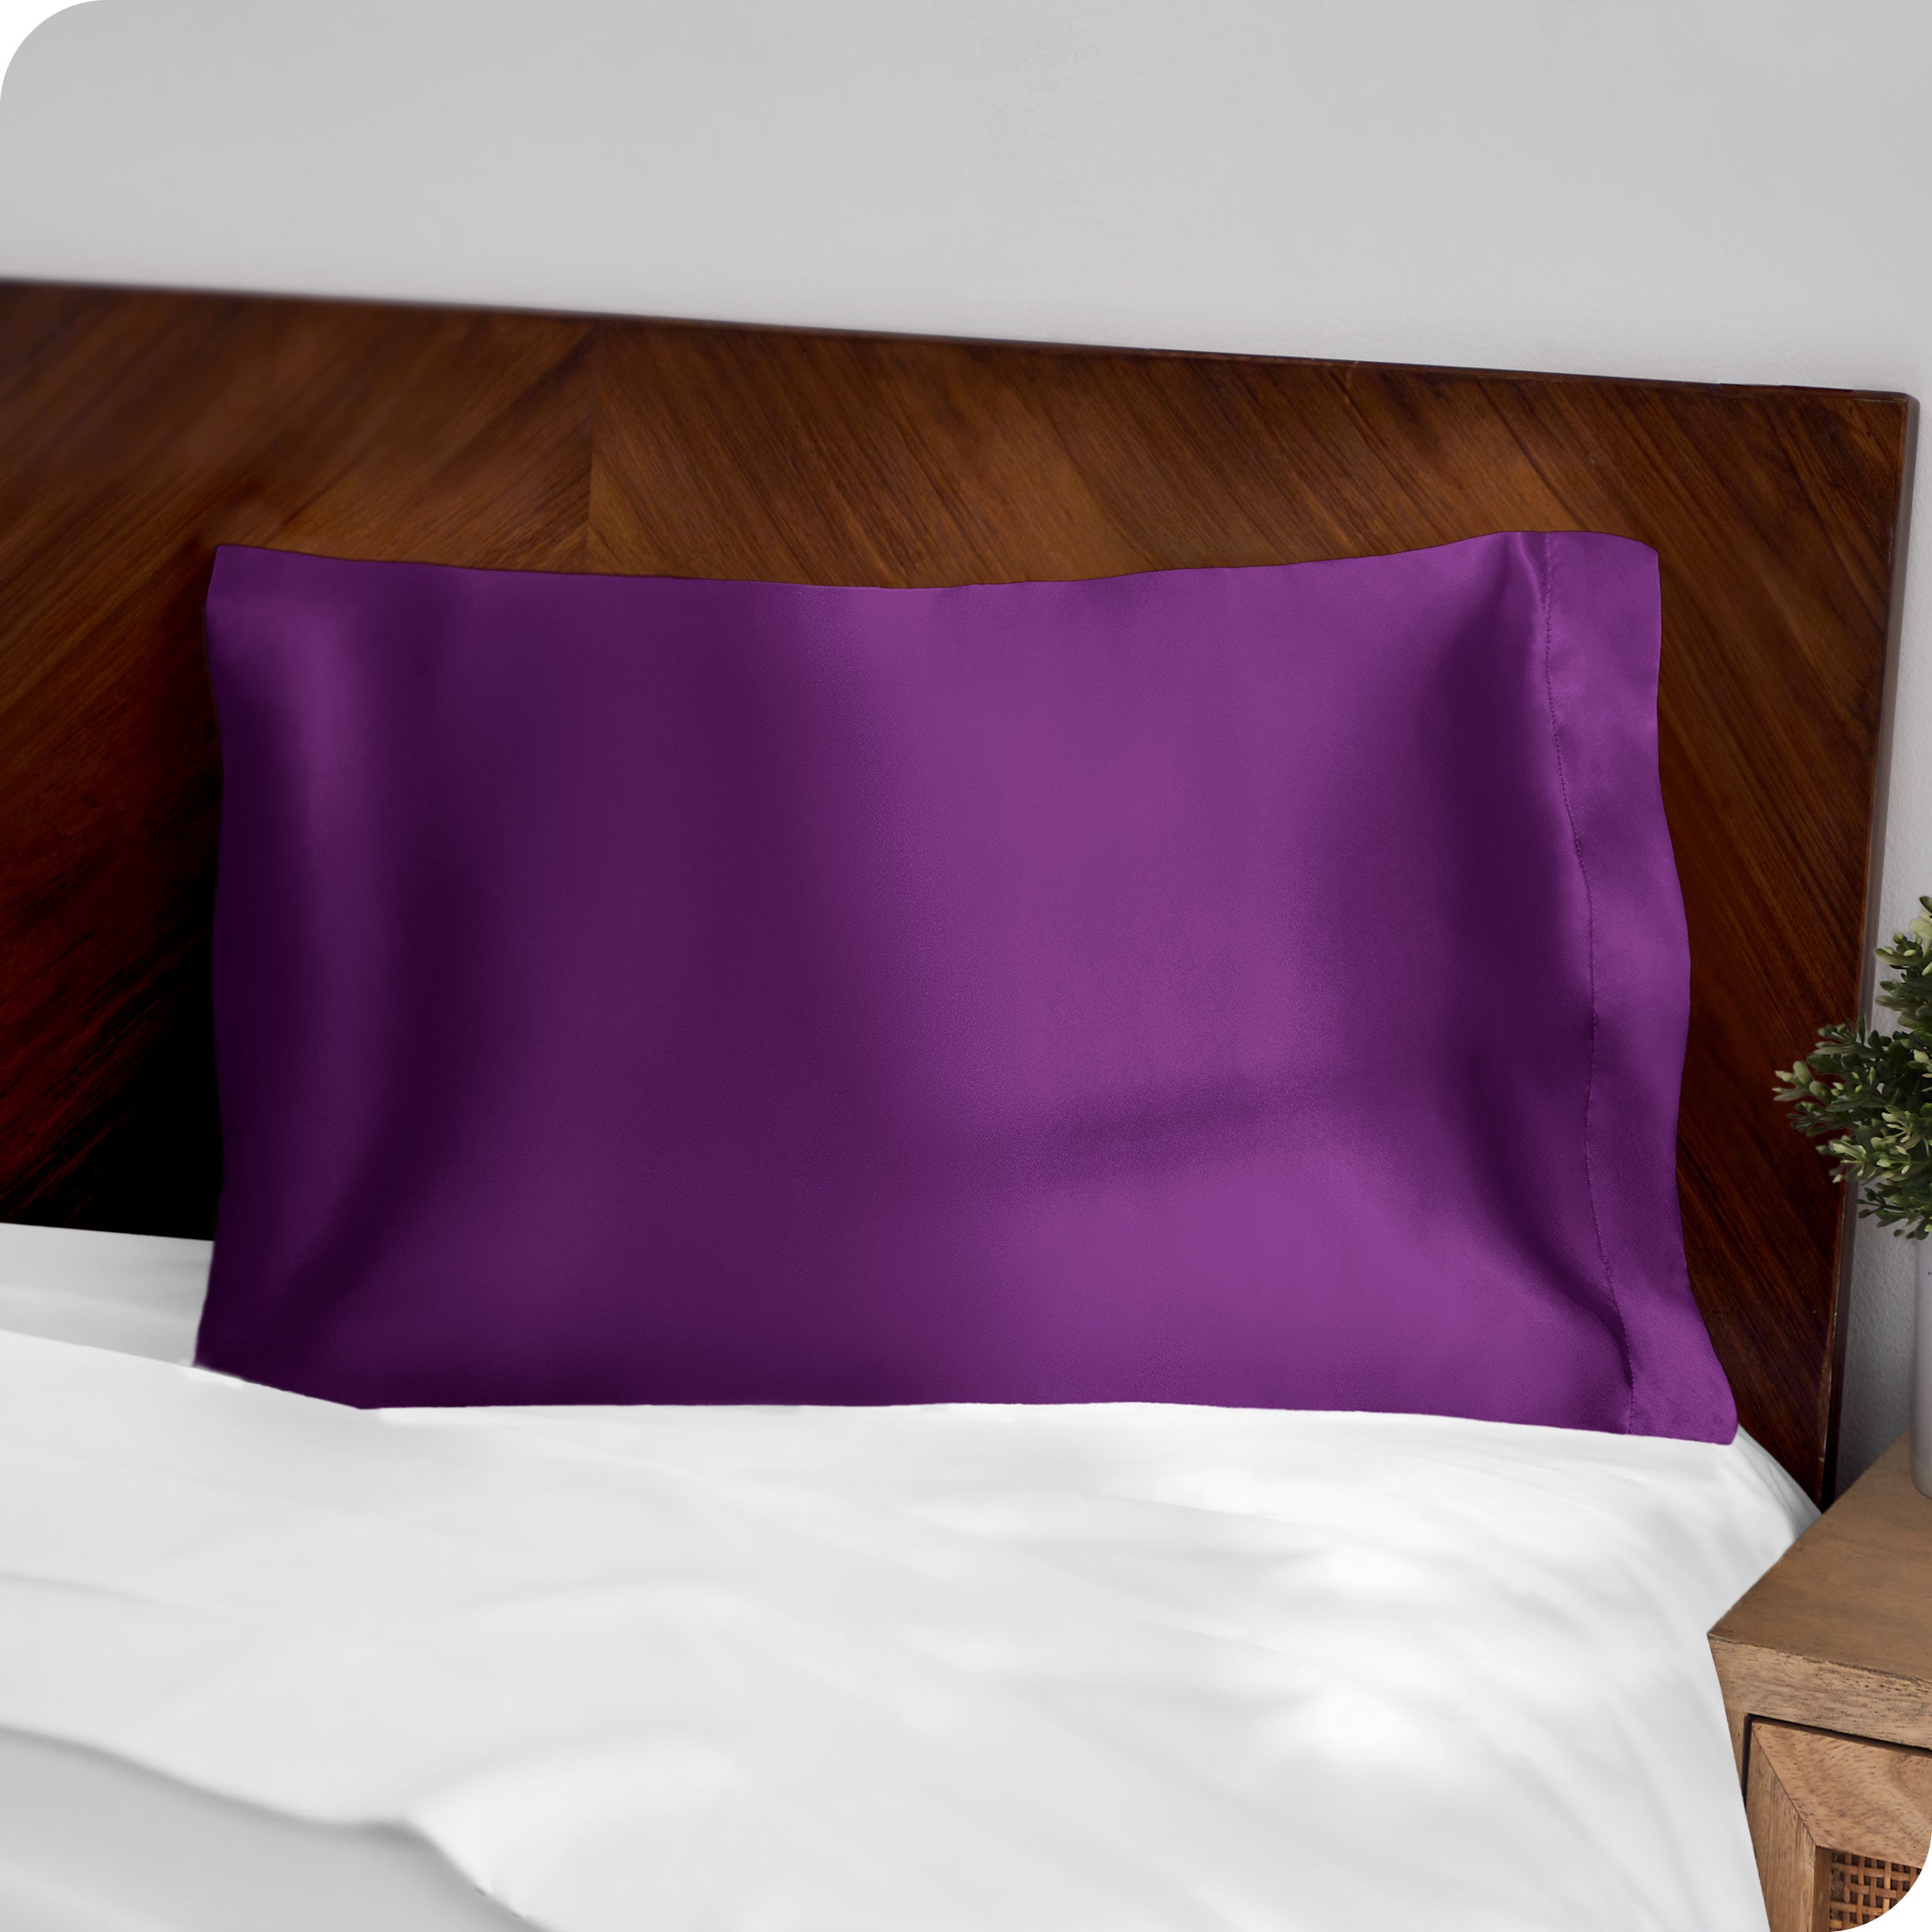 A purple silk pillowcase on a pillow resting on a headboard